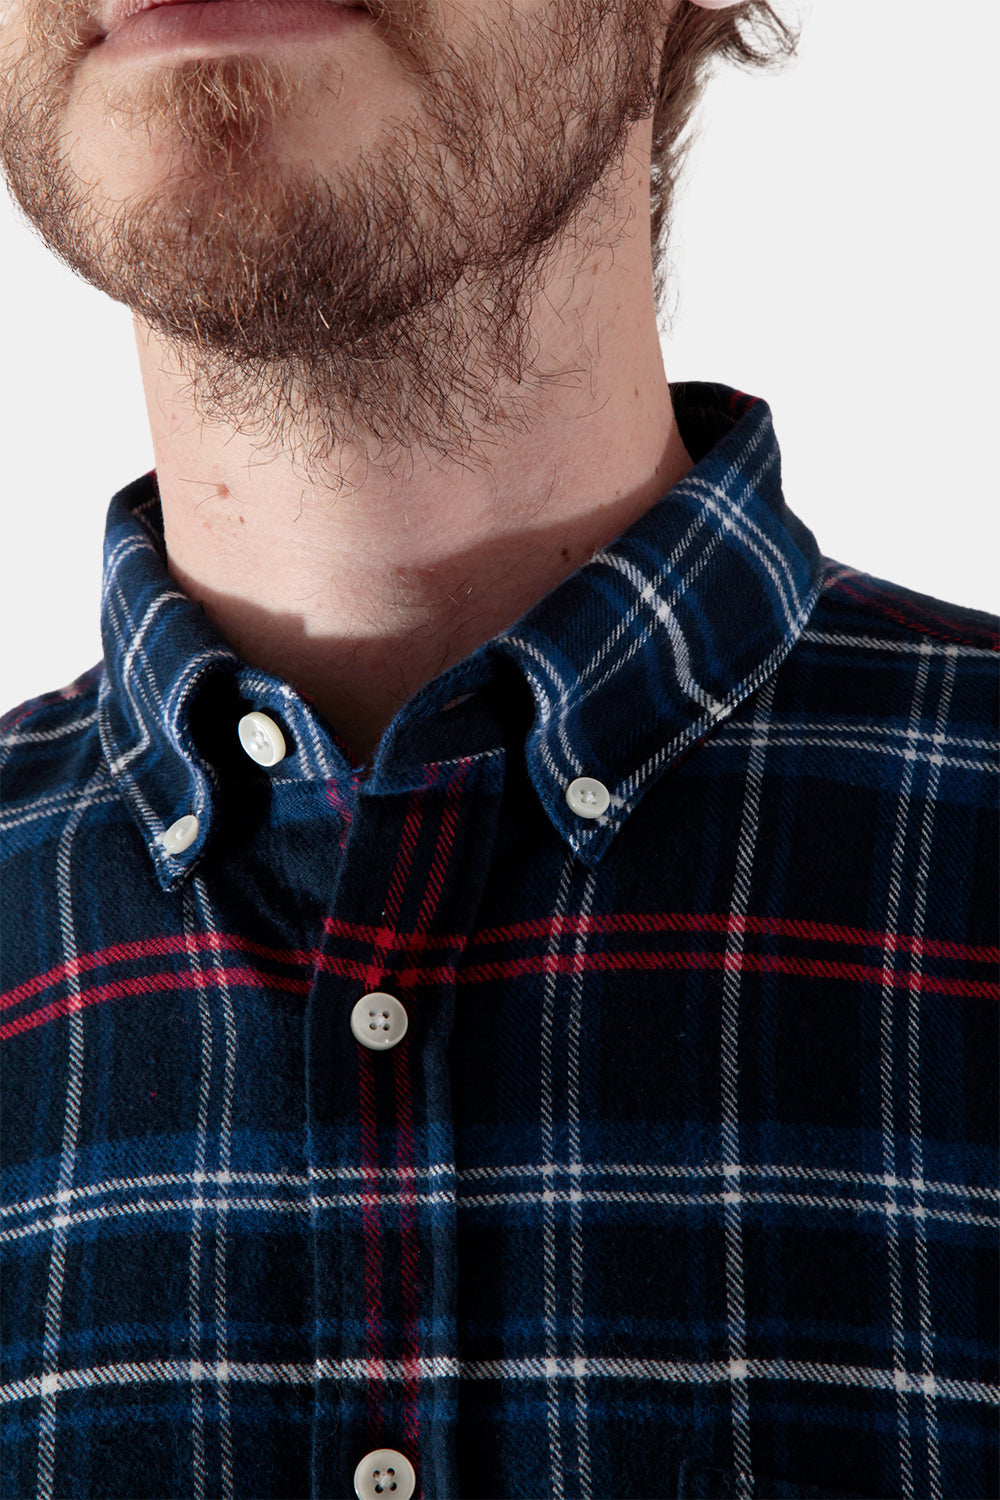 Portuguese Flannel Pop Up ESP Check Shirt (Blue / White / Red)